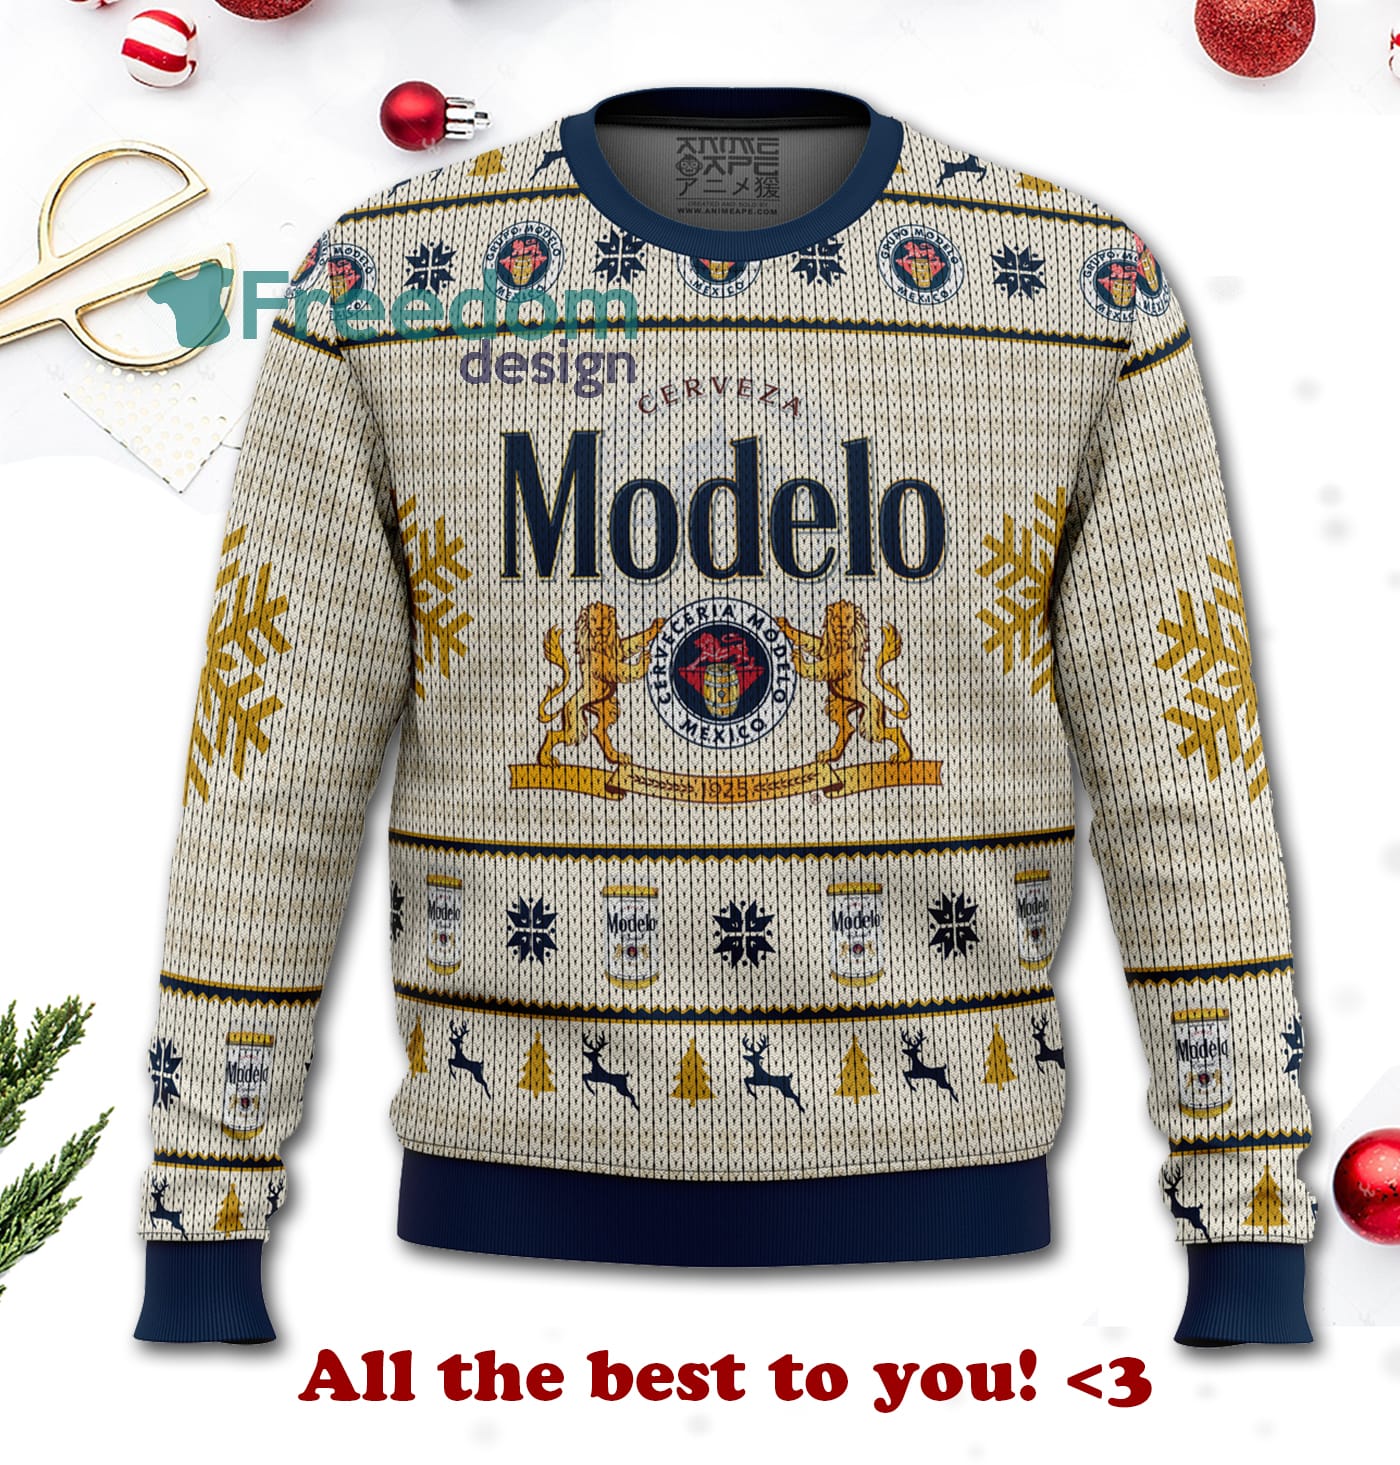 Merry Christmas Cerveza Modelo Ugly Christmas Sweater